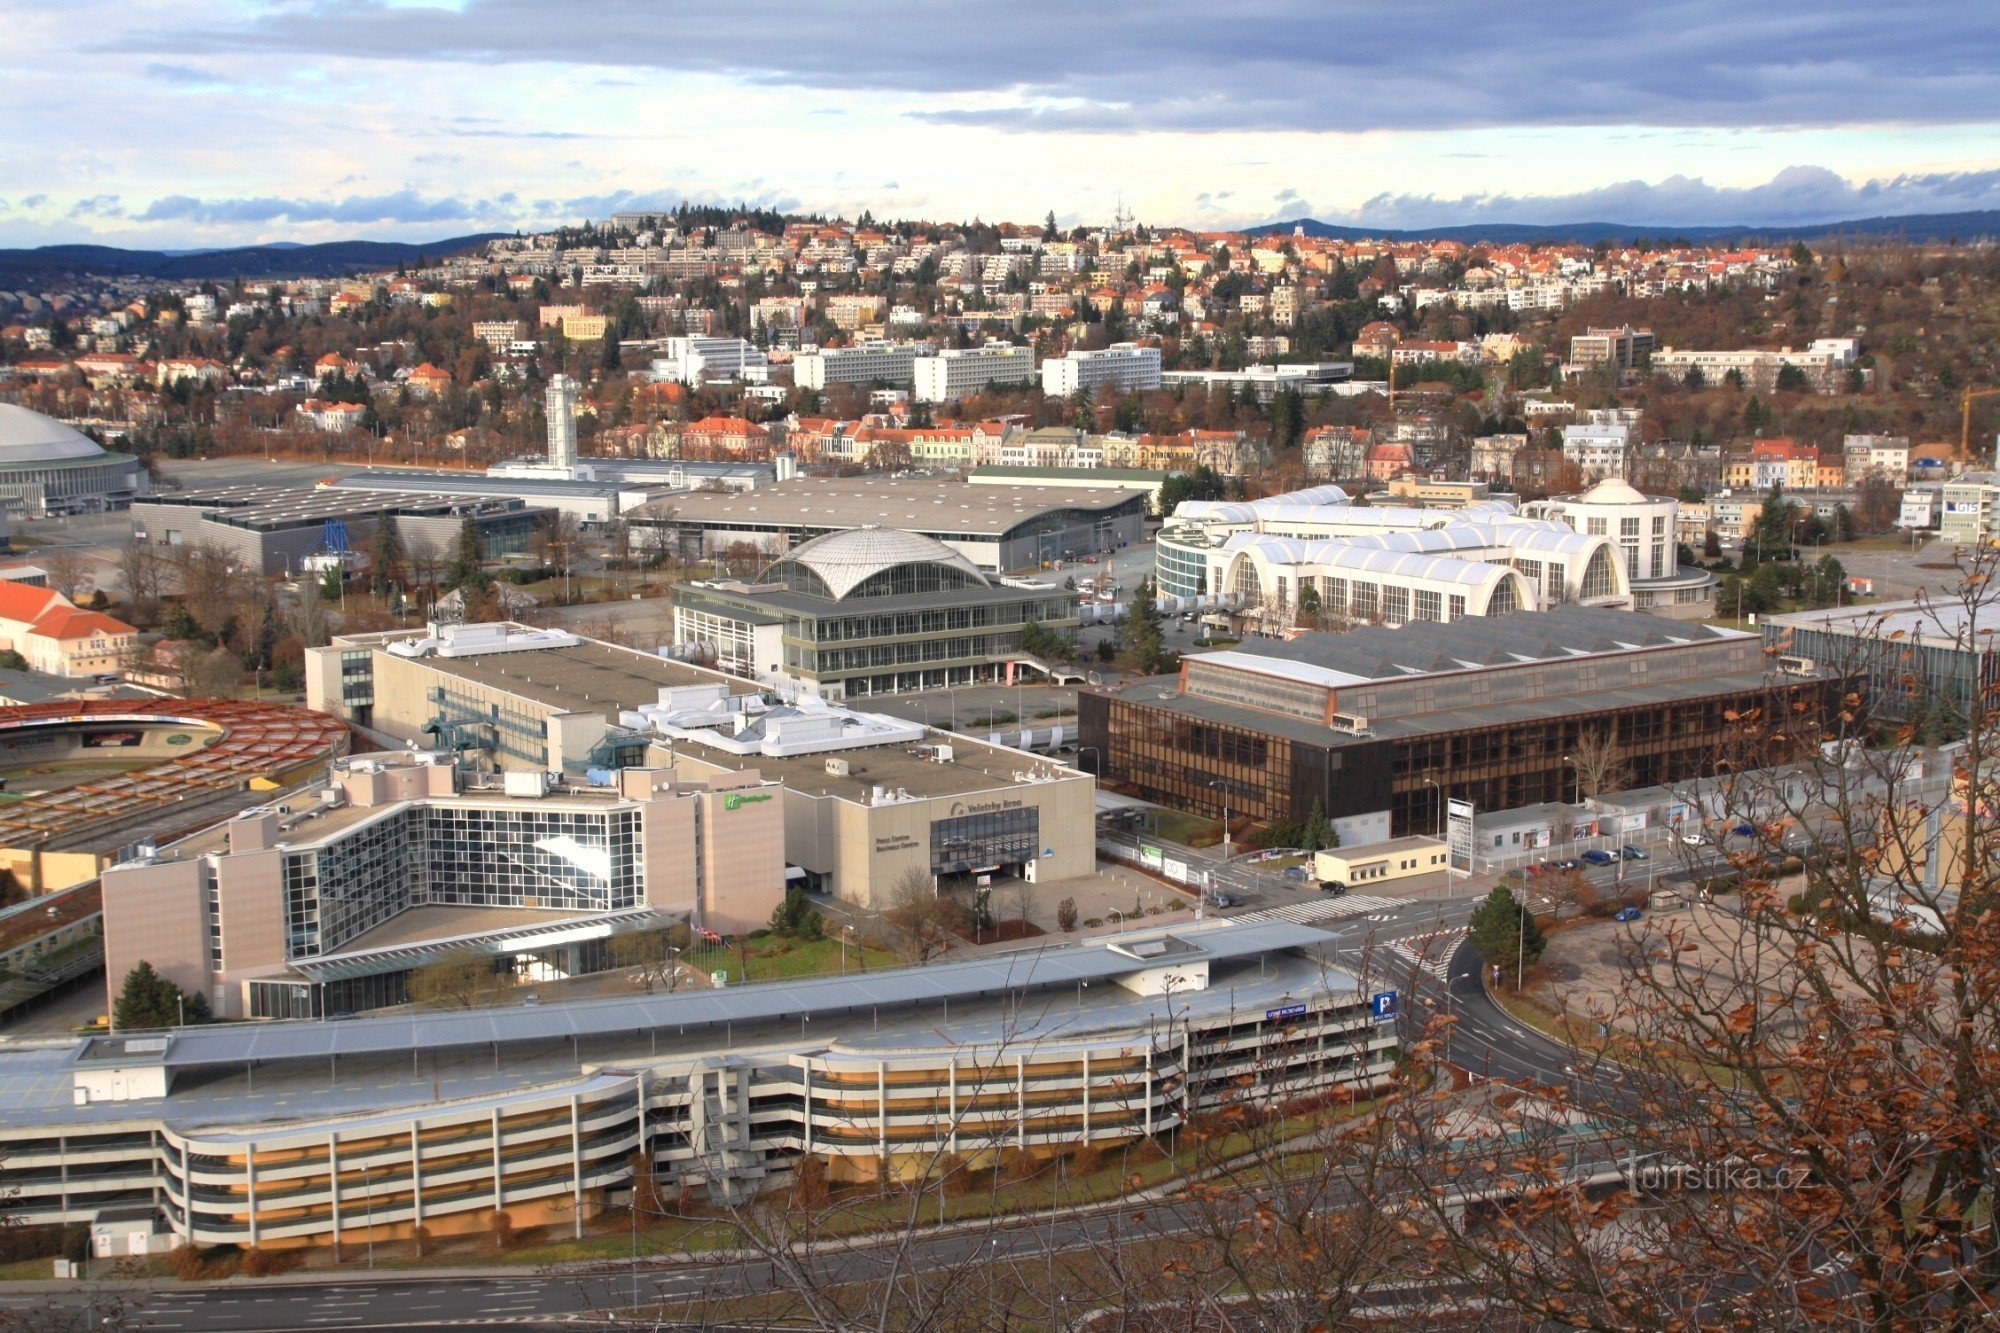 Vista do mirante da parte central do Centro de Exposições, com o bairro Masaryk ao fundo